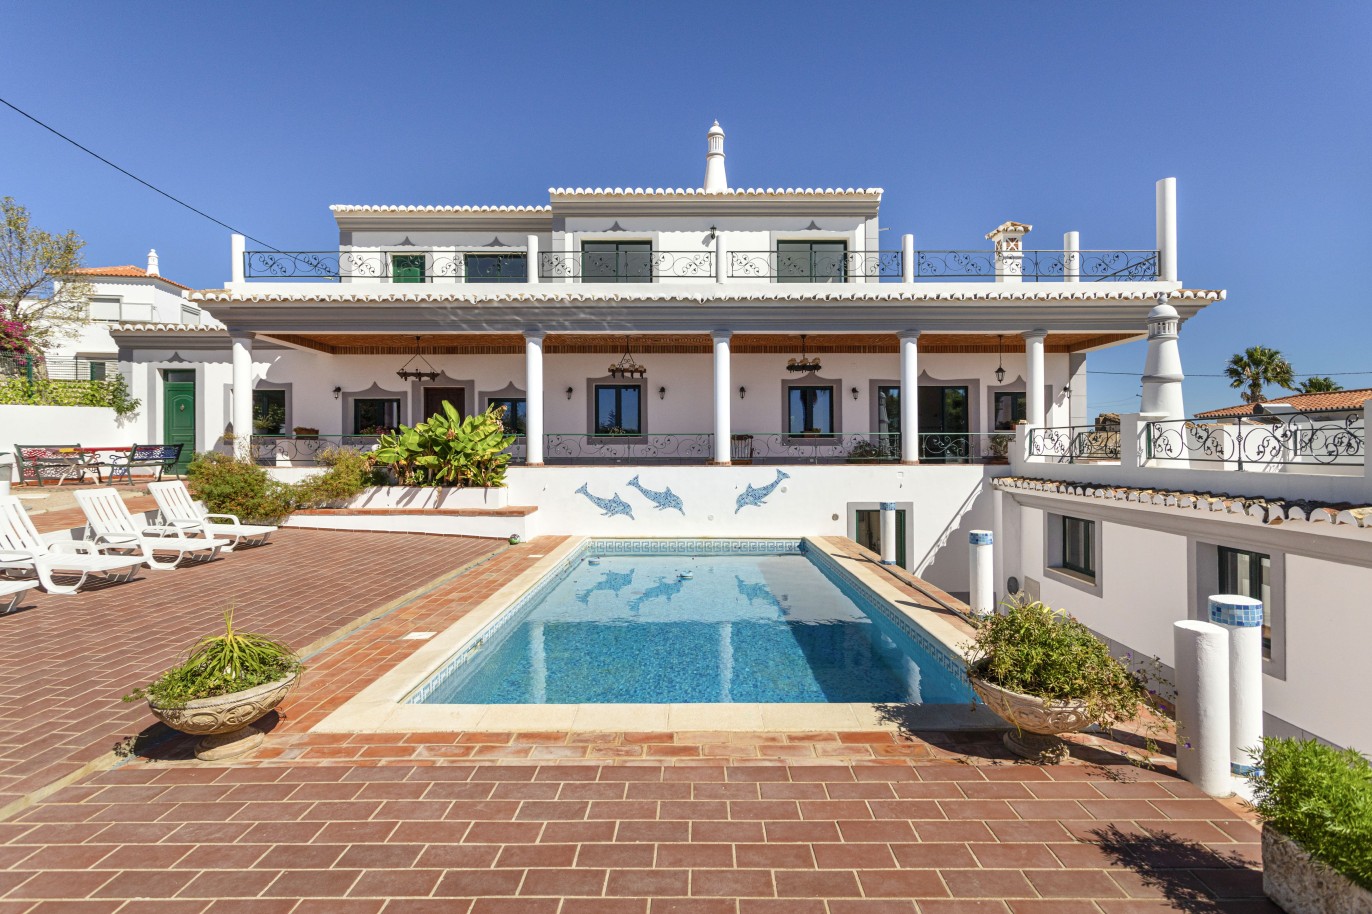 Villa zum Verkauf mit pool, Meer-und Bergblick, Loulé, Algarve, Portugal_236413